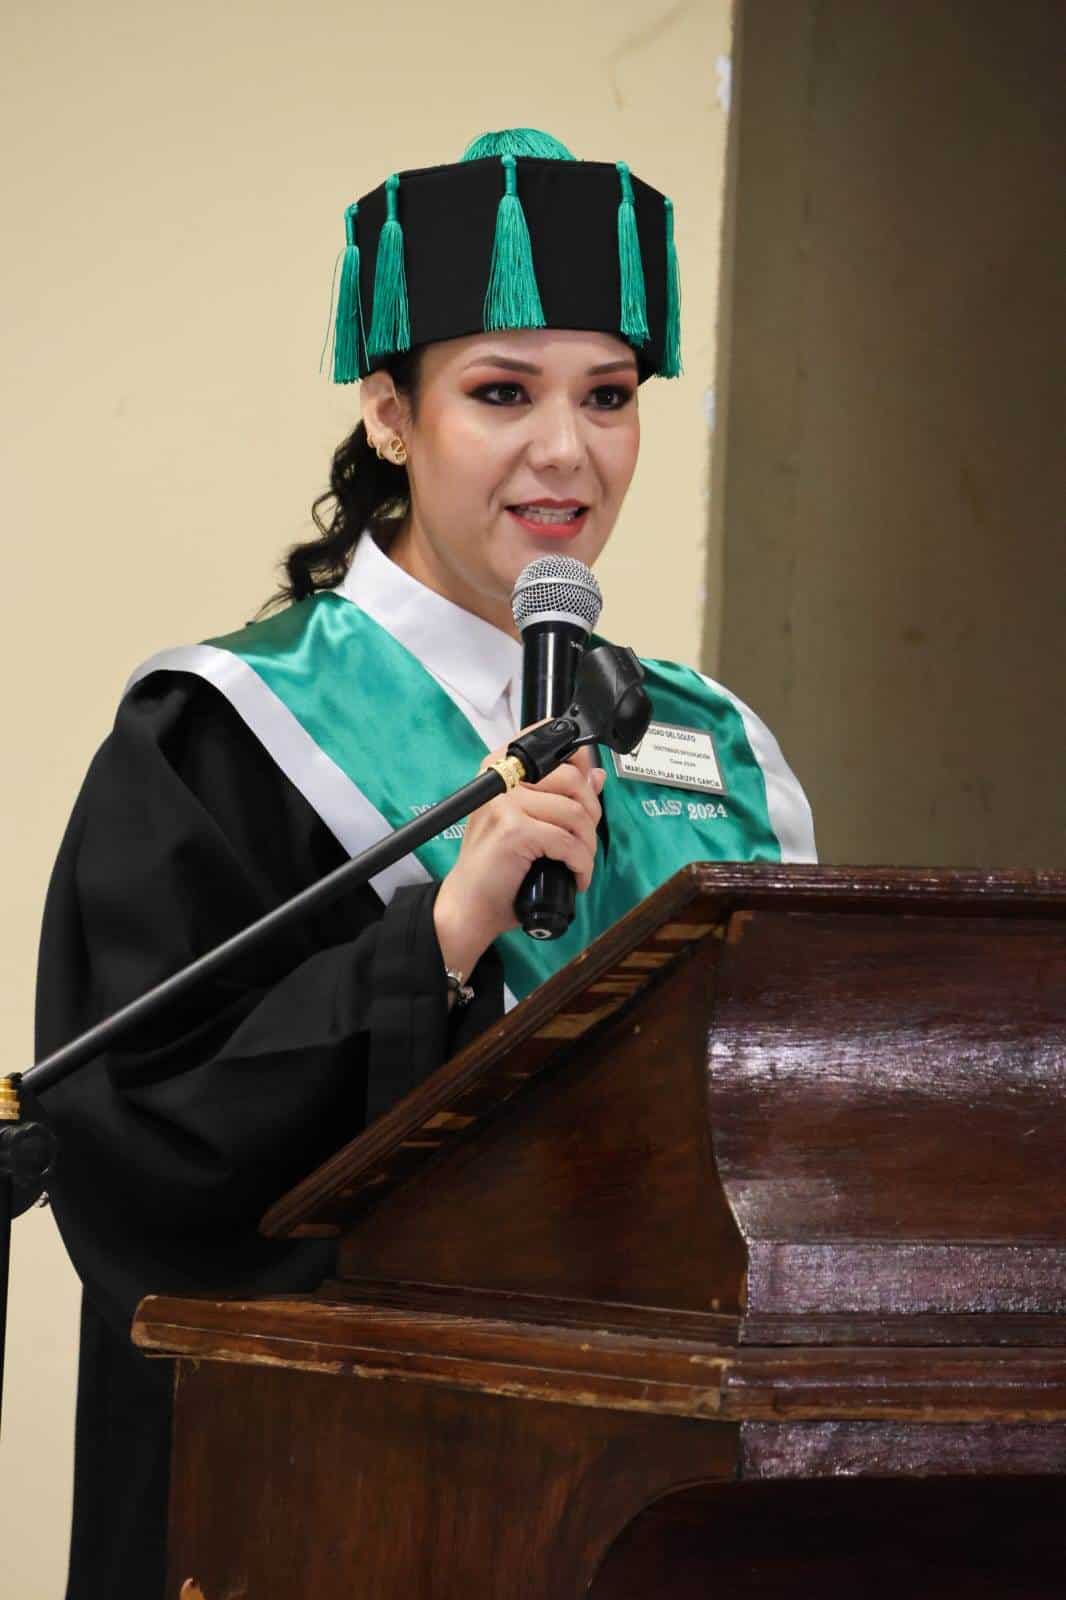 Asiste presidenta Municipal Diana Haro a graduación de doctores en Educación 